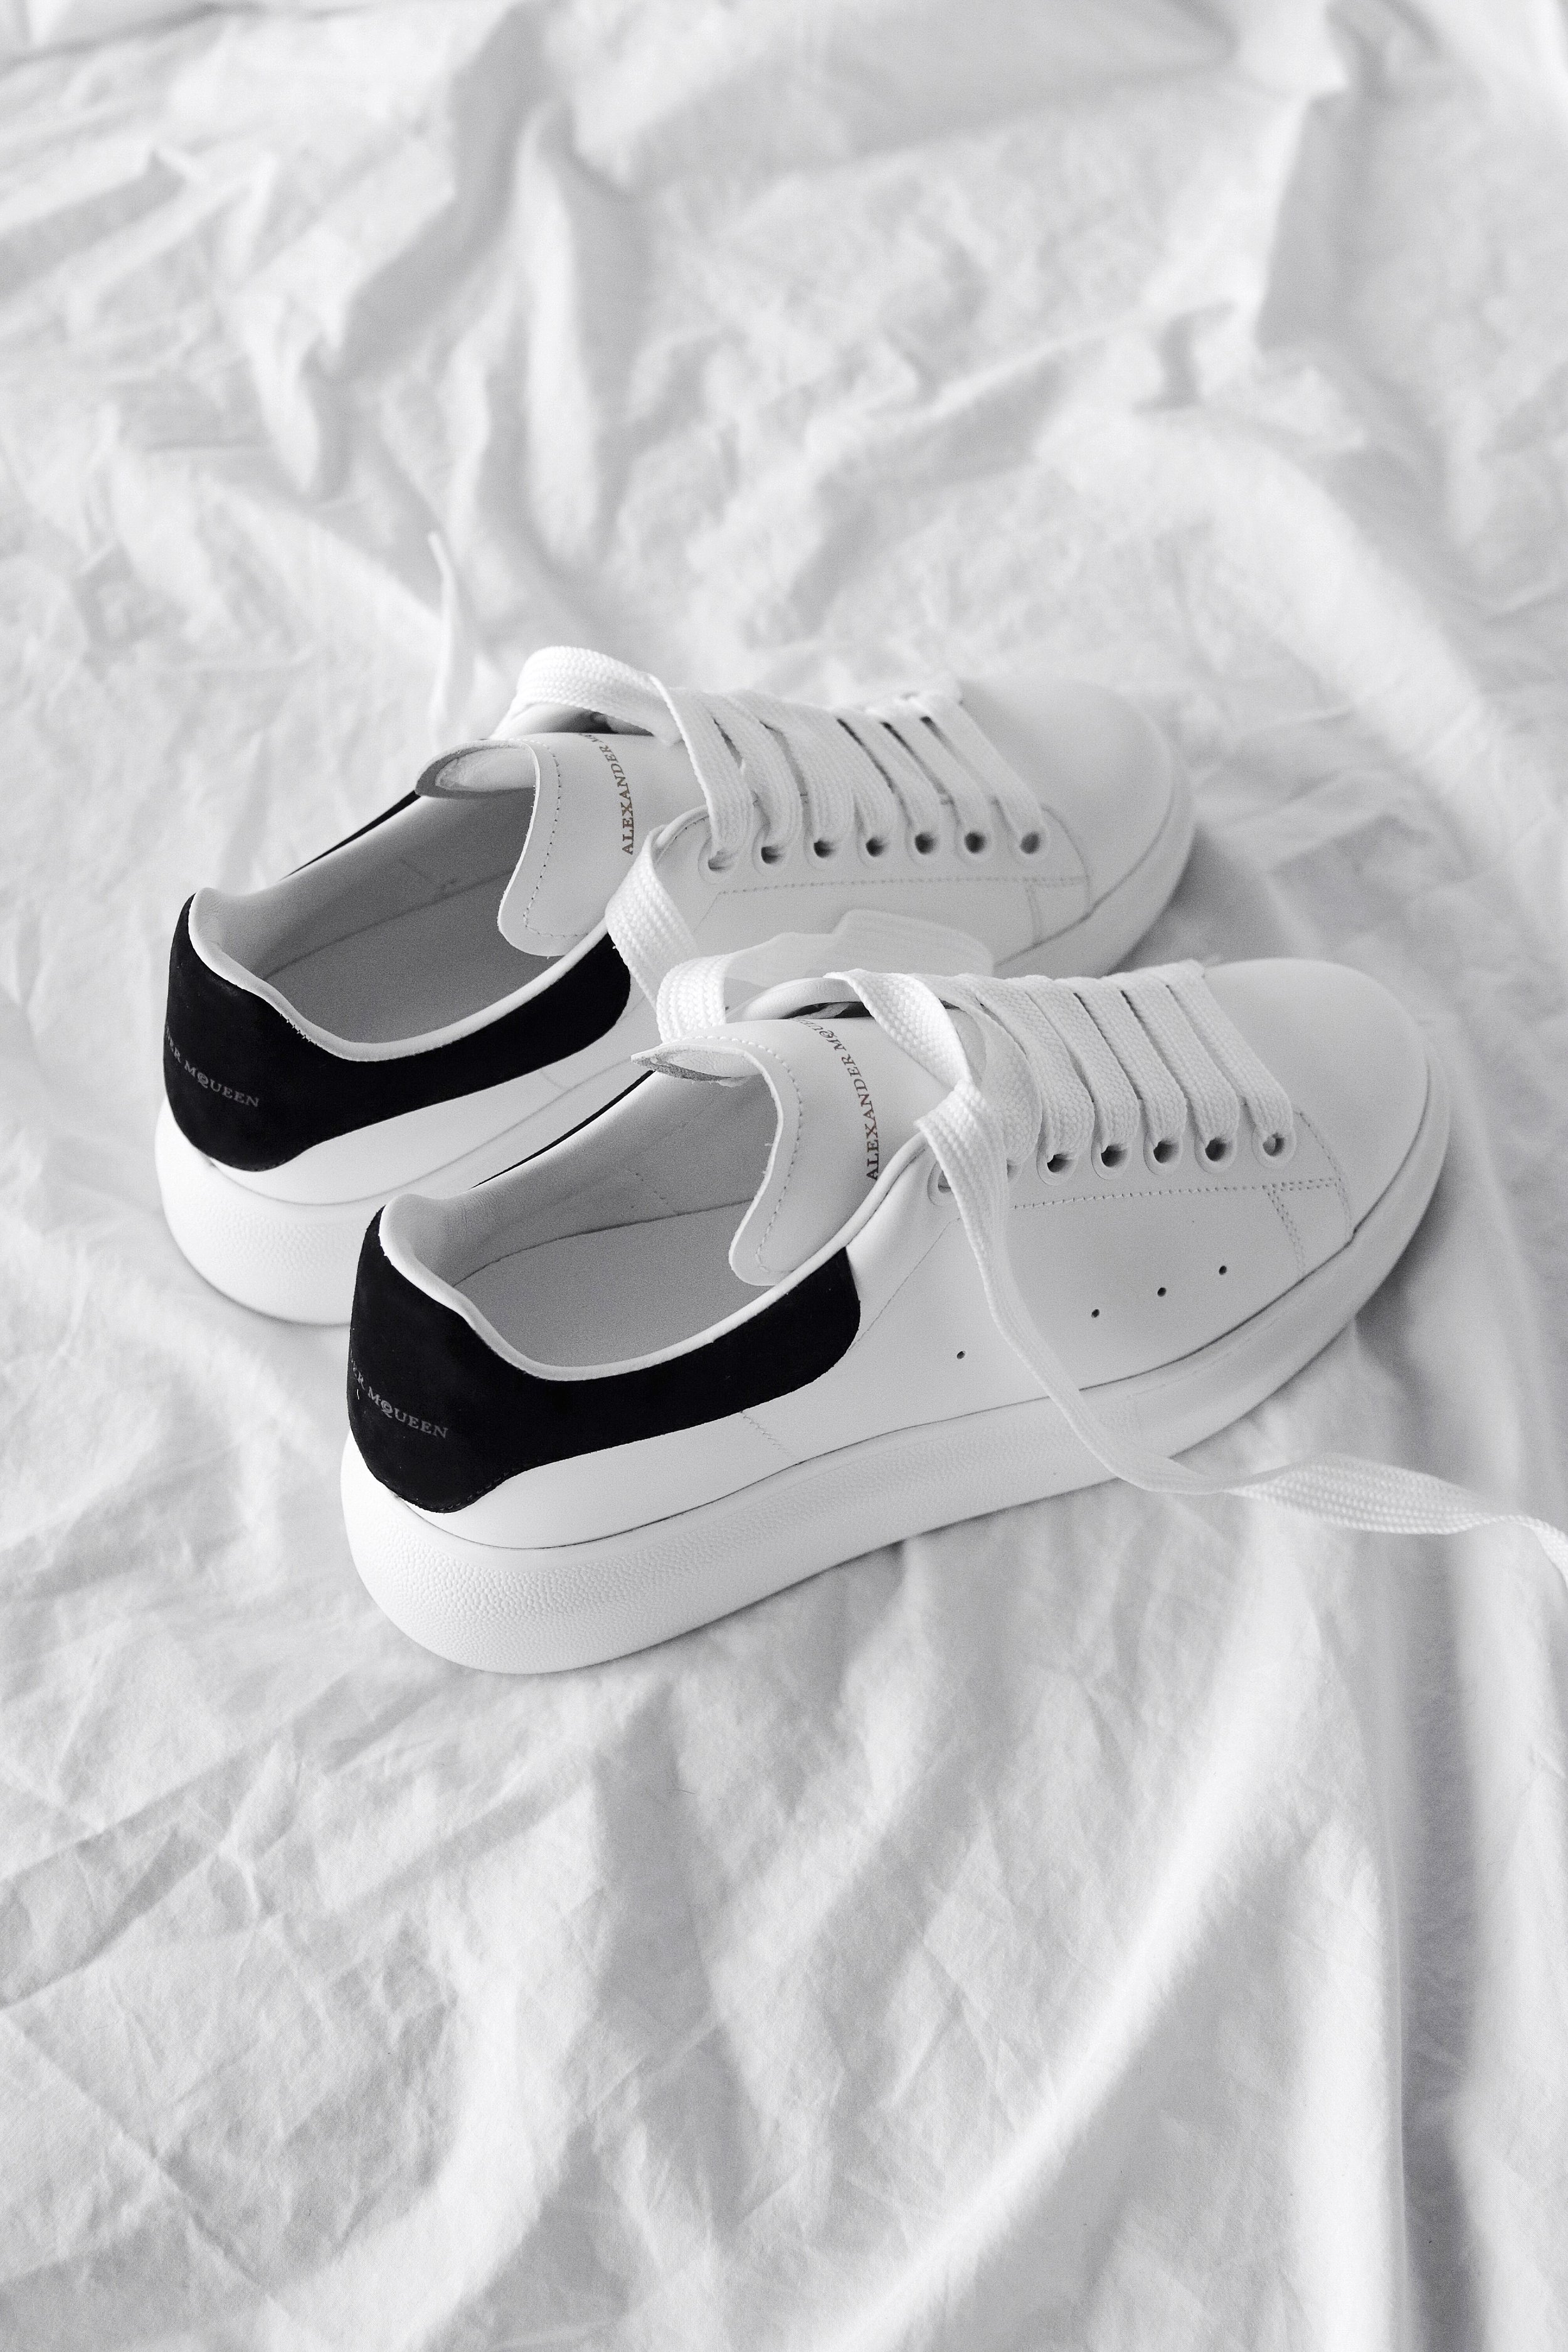 Alexander McQueen Oversized Black And White Sneakers New | eBay